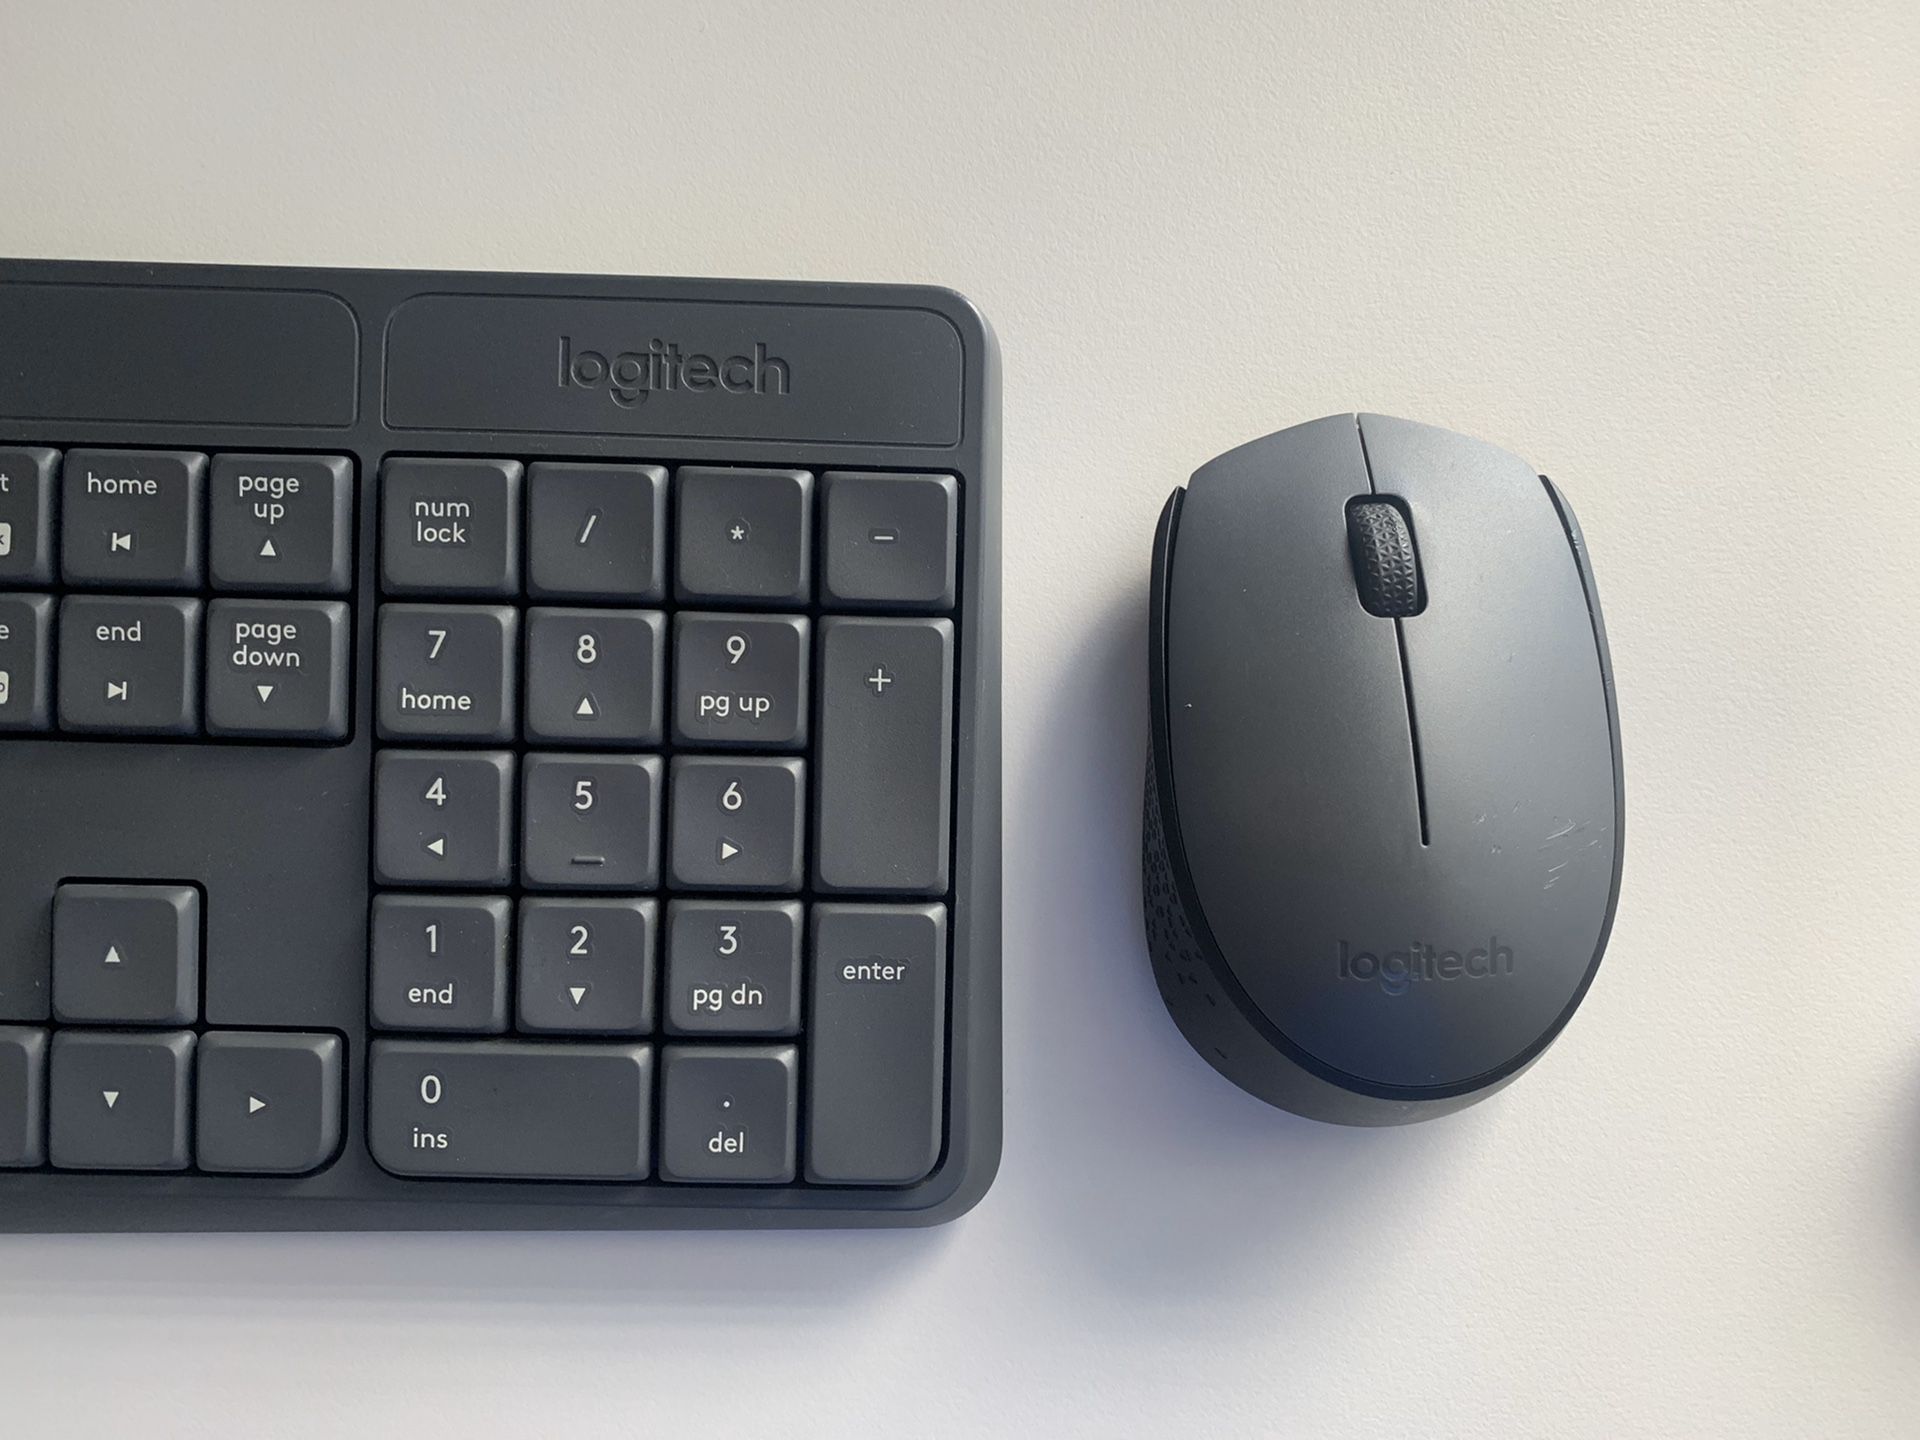 Logitech Wireless Mouse and Keyboard via USB